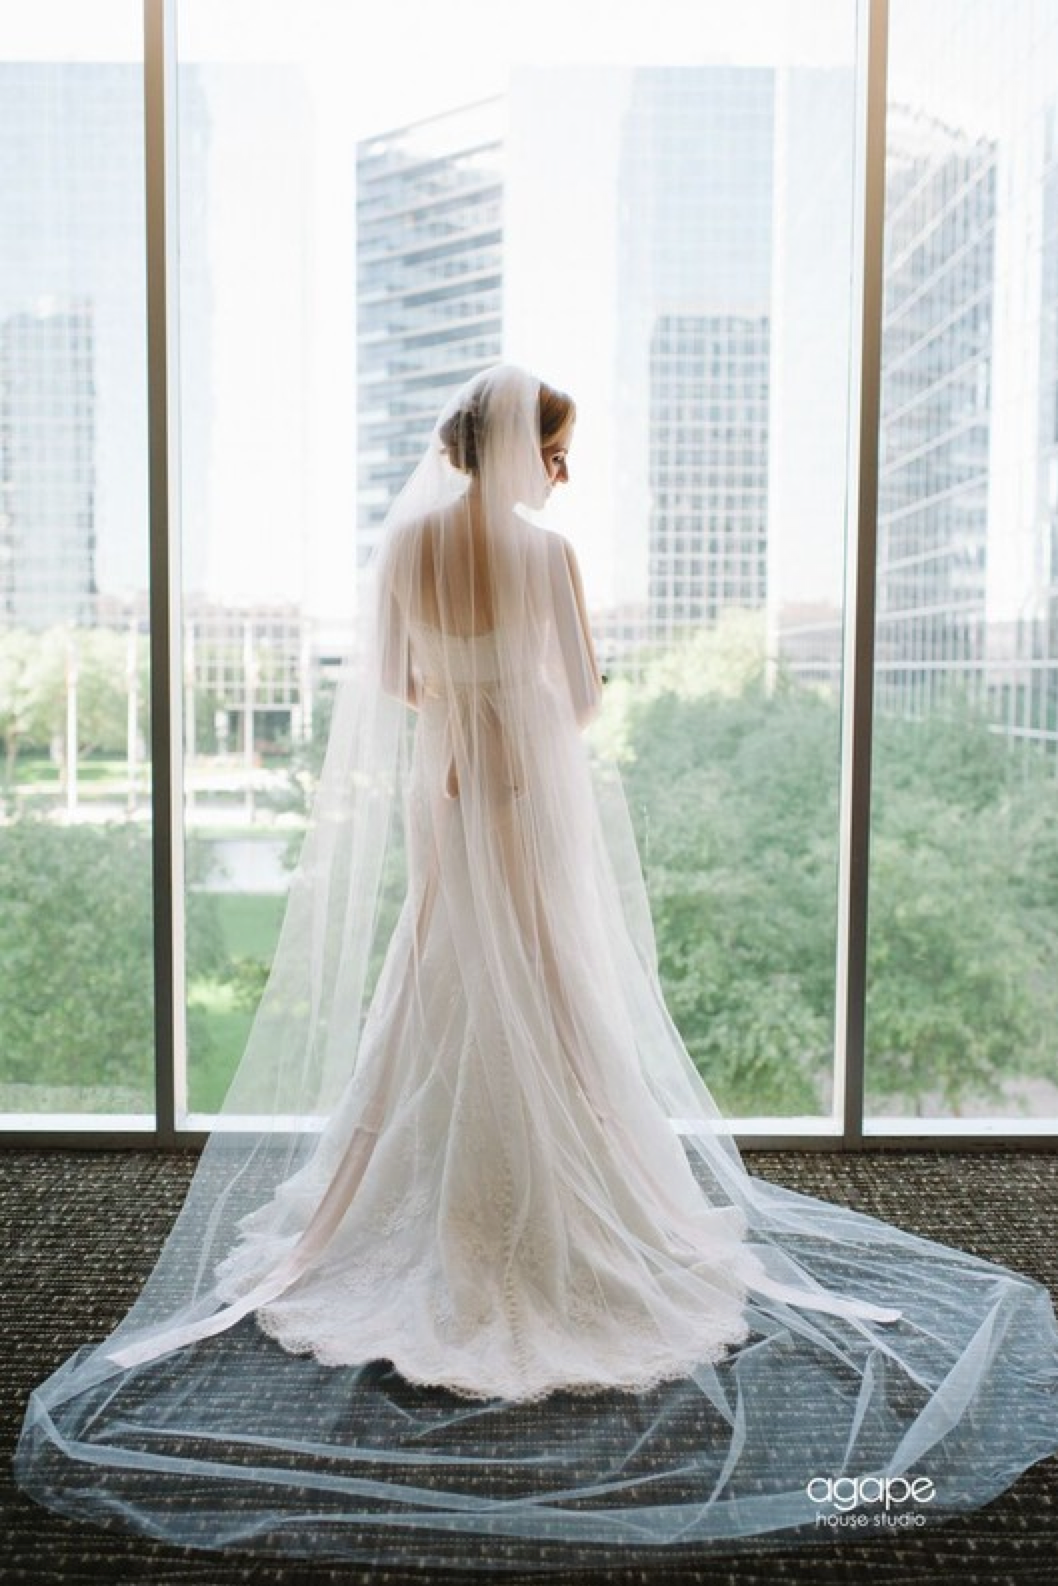 Wedding Ceremony + Reception Space – The Houston Club